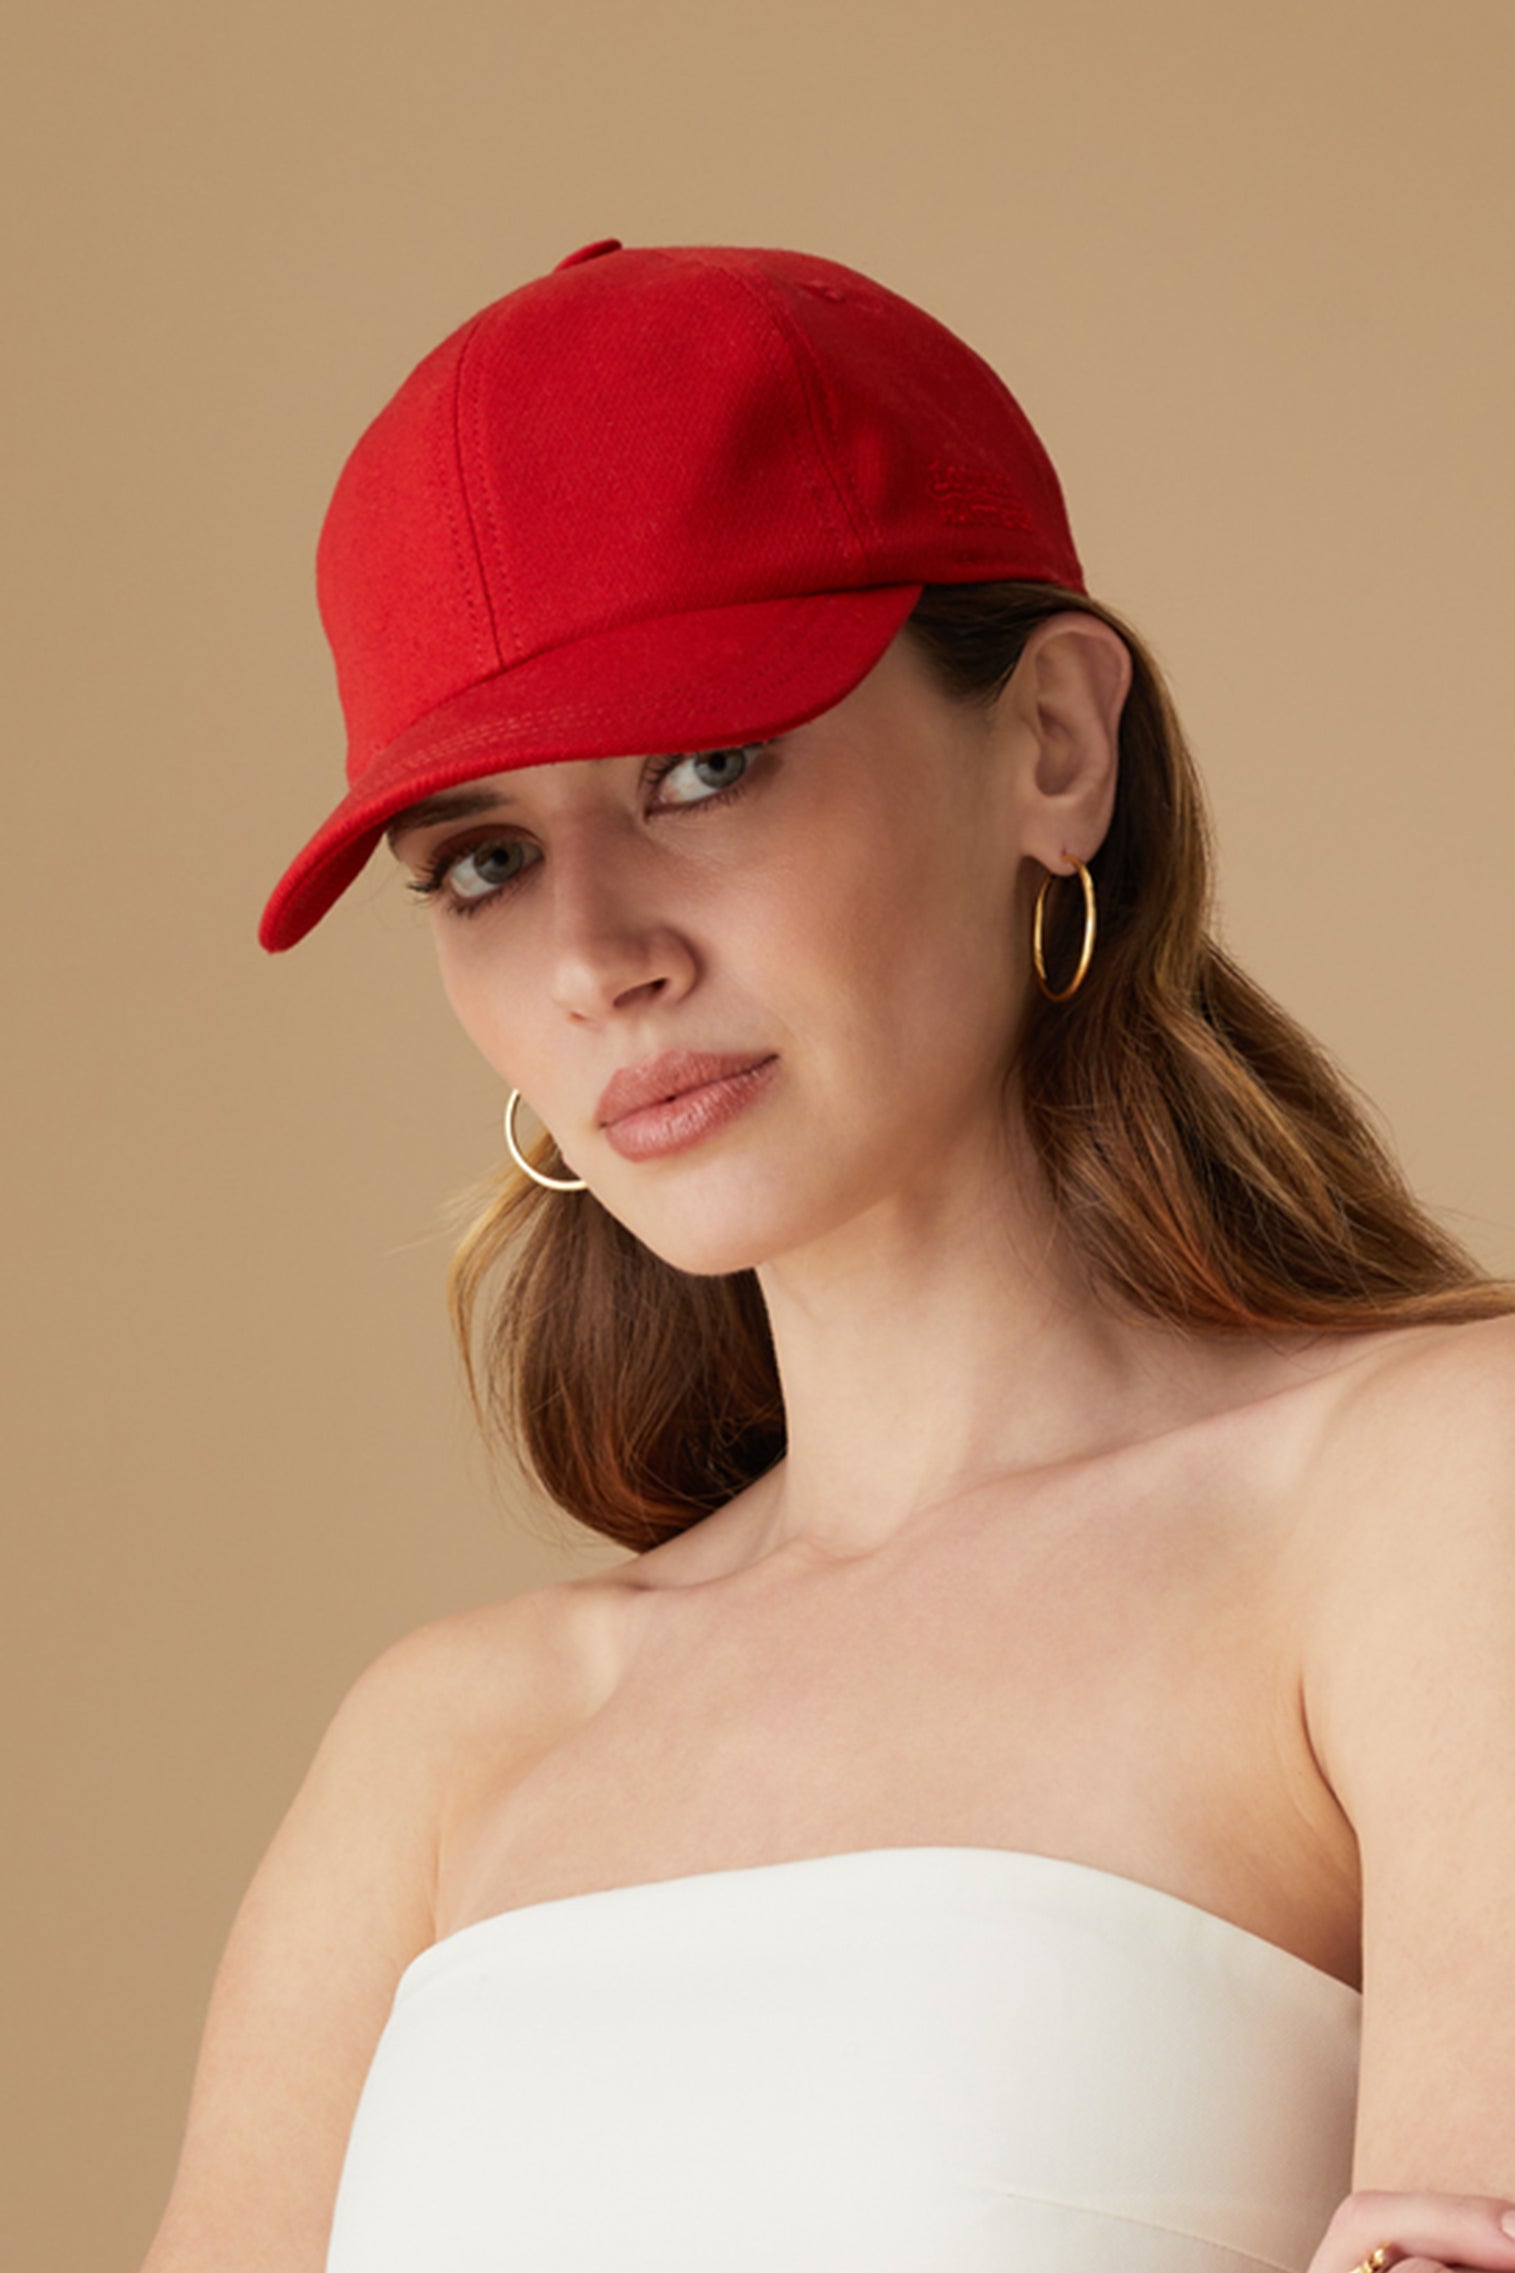 Adjustable Red Baseball Cap - Women’s Hats - Lock & Co. Hatters London UK